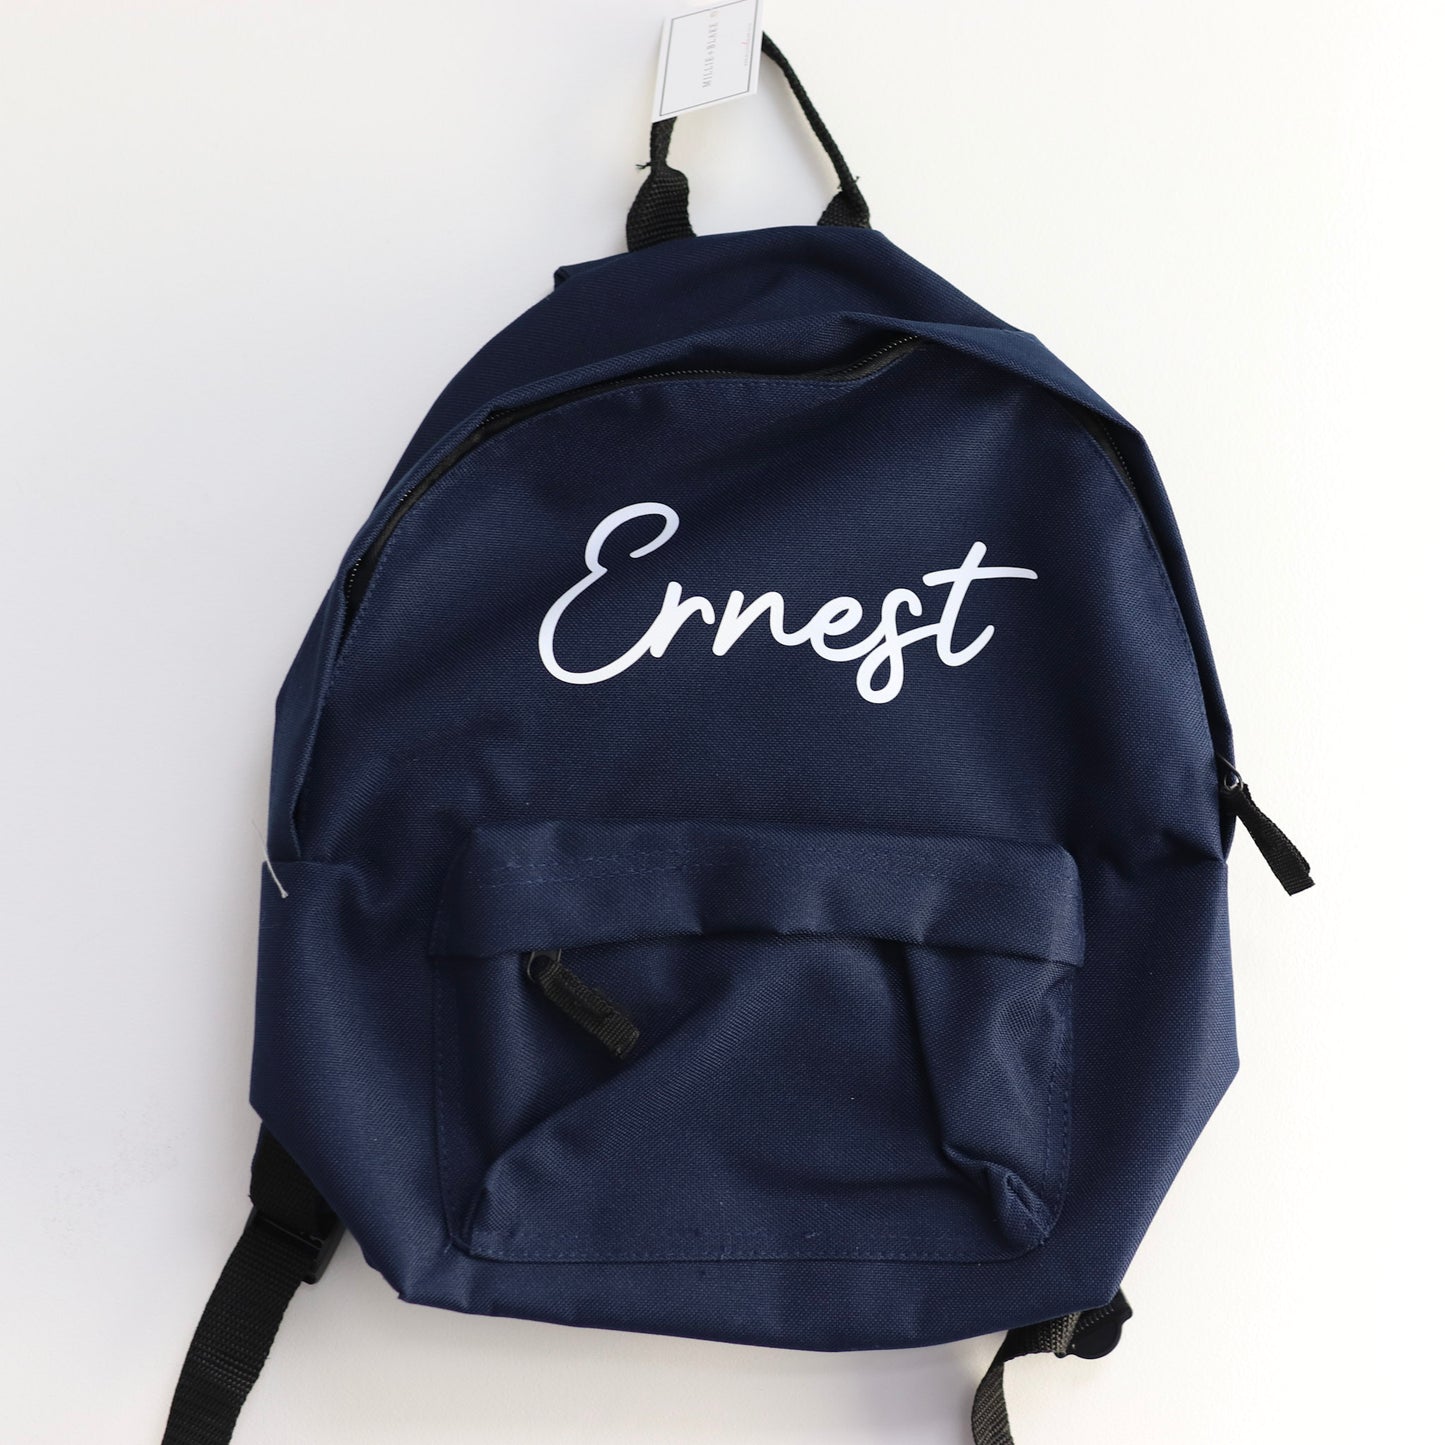 Signature Name Personalised Mini Fashion Backpack